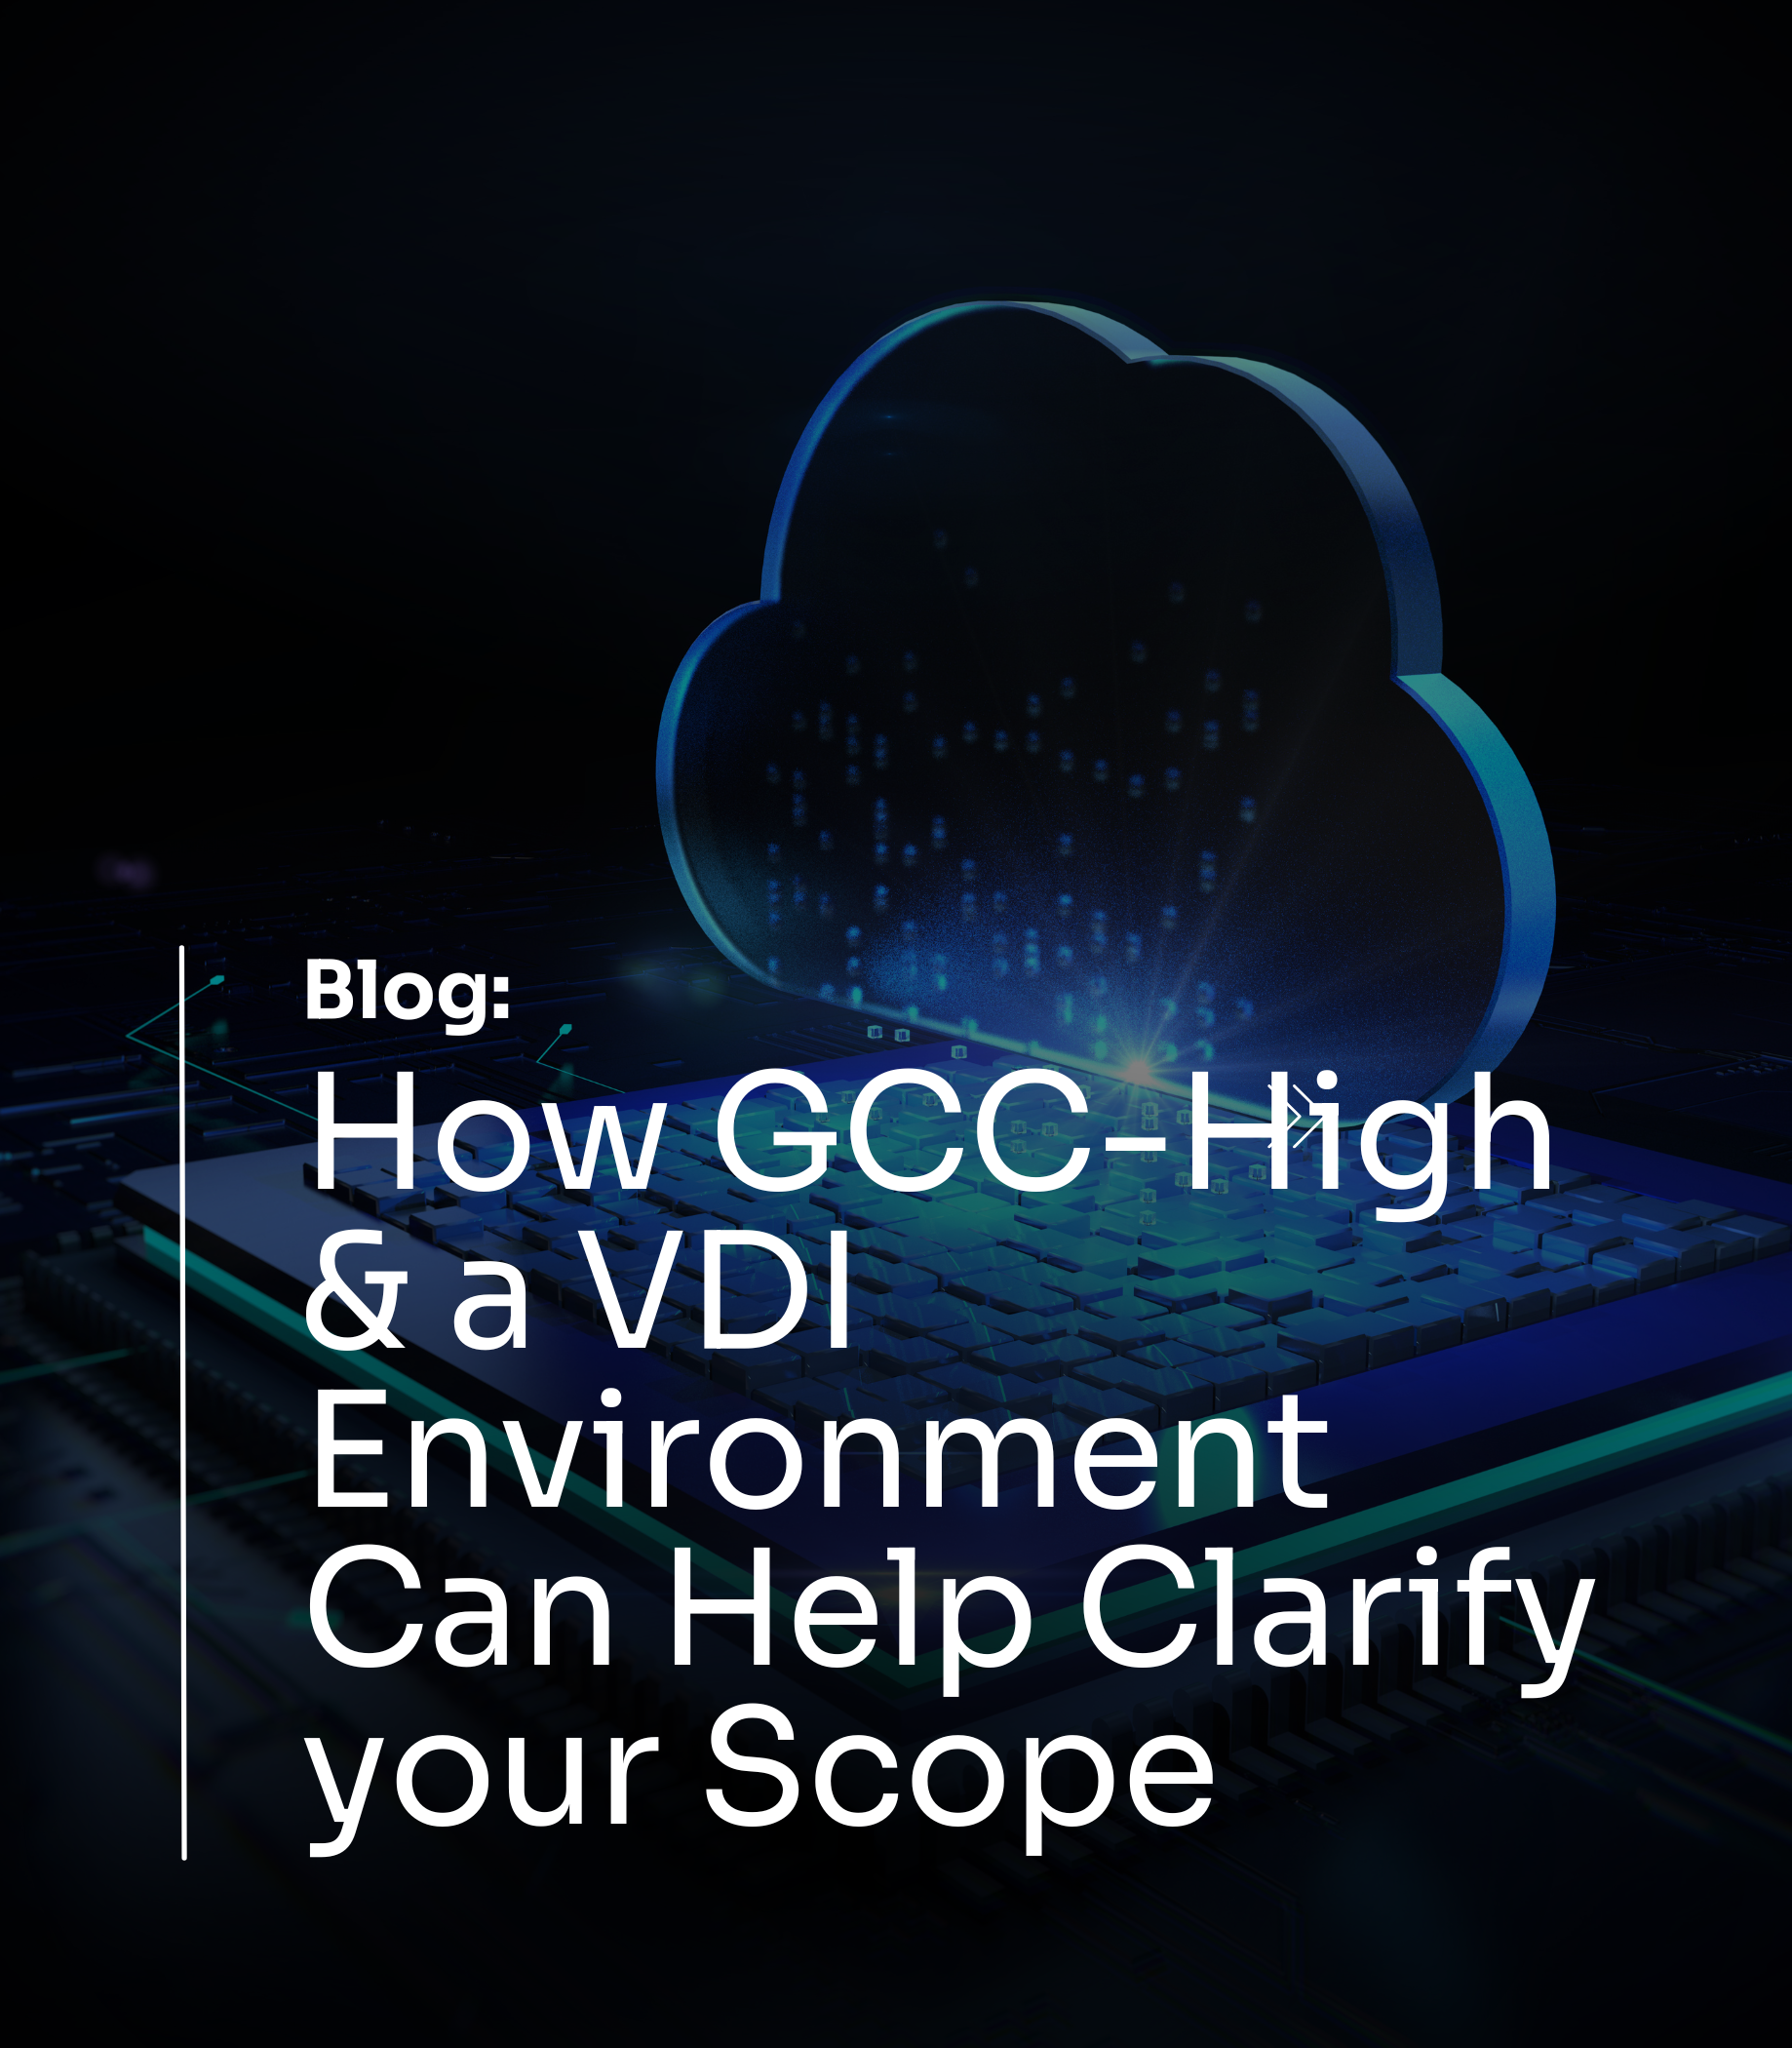 GCC-High and VDI blog